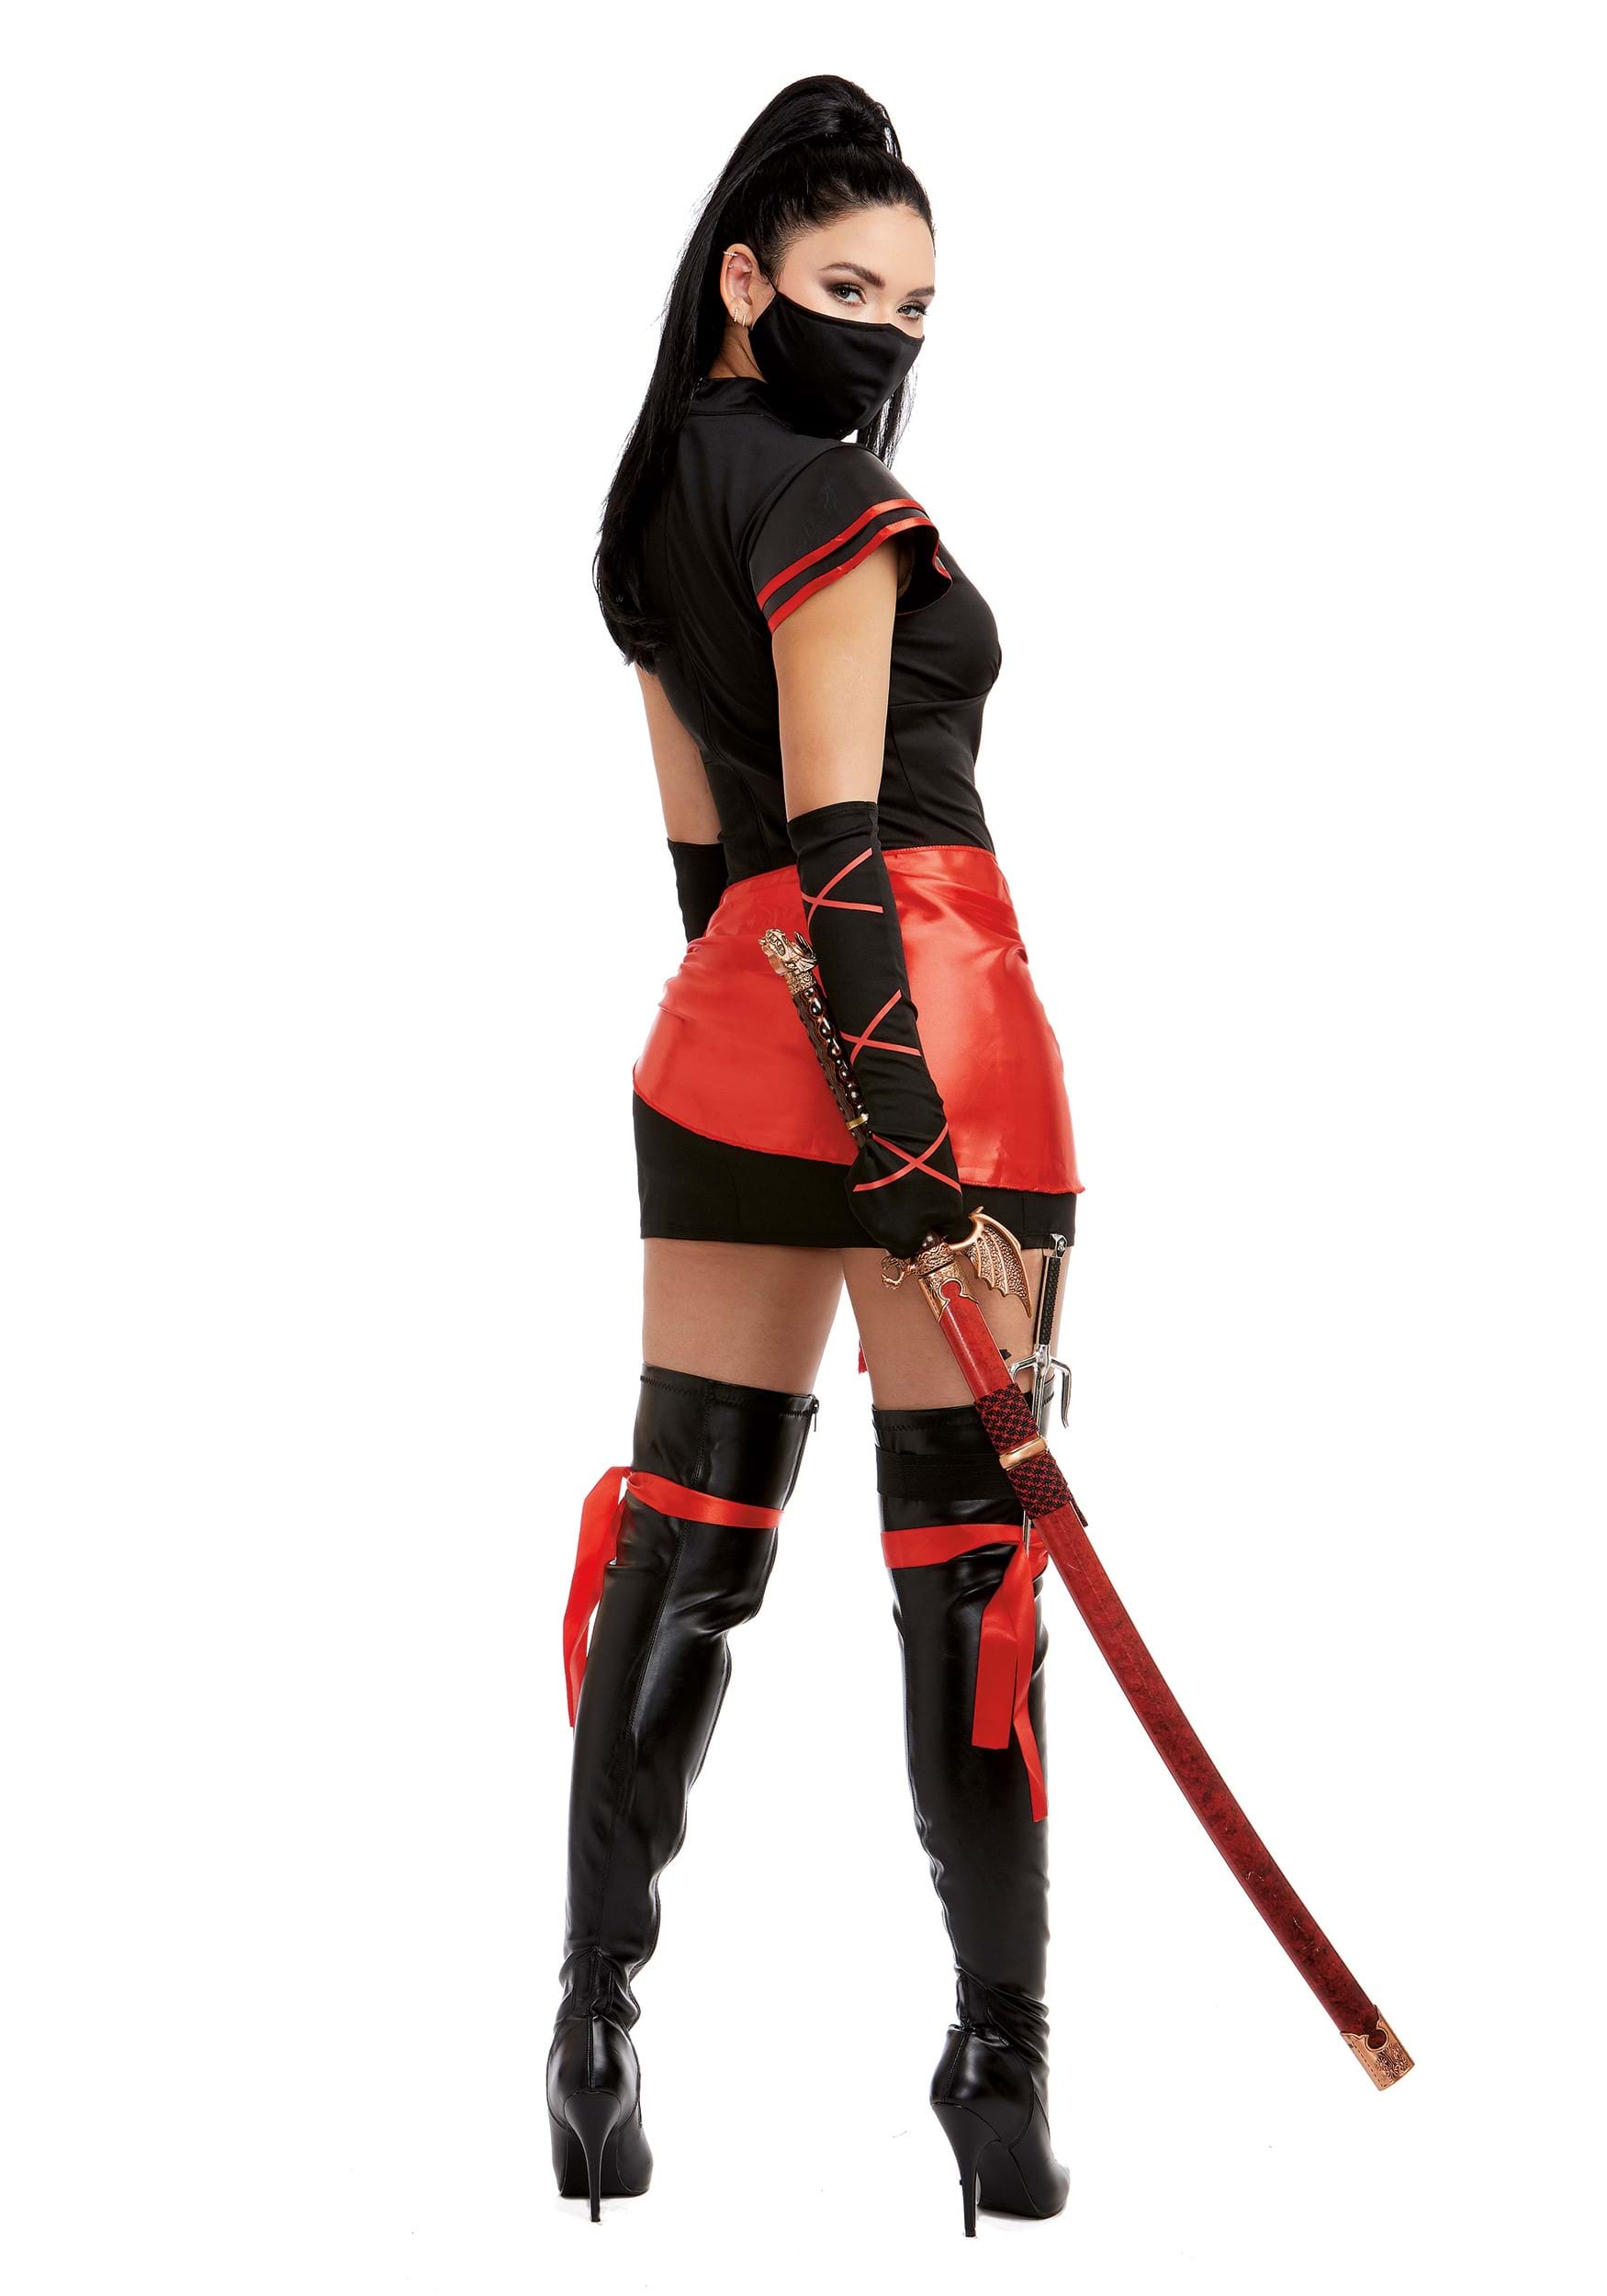 Silent Ninja Women's Costume